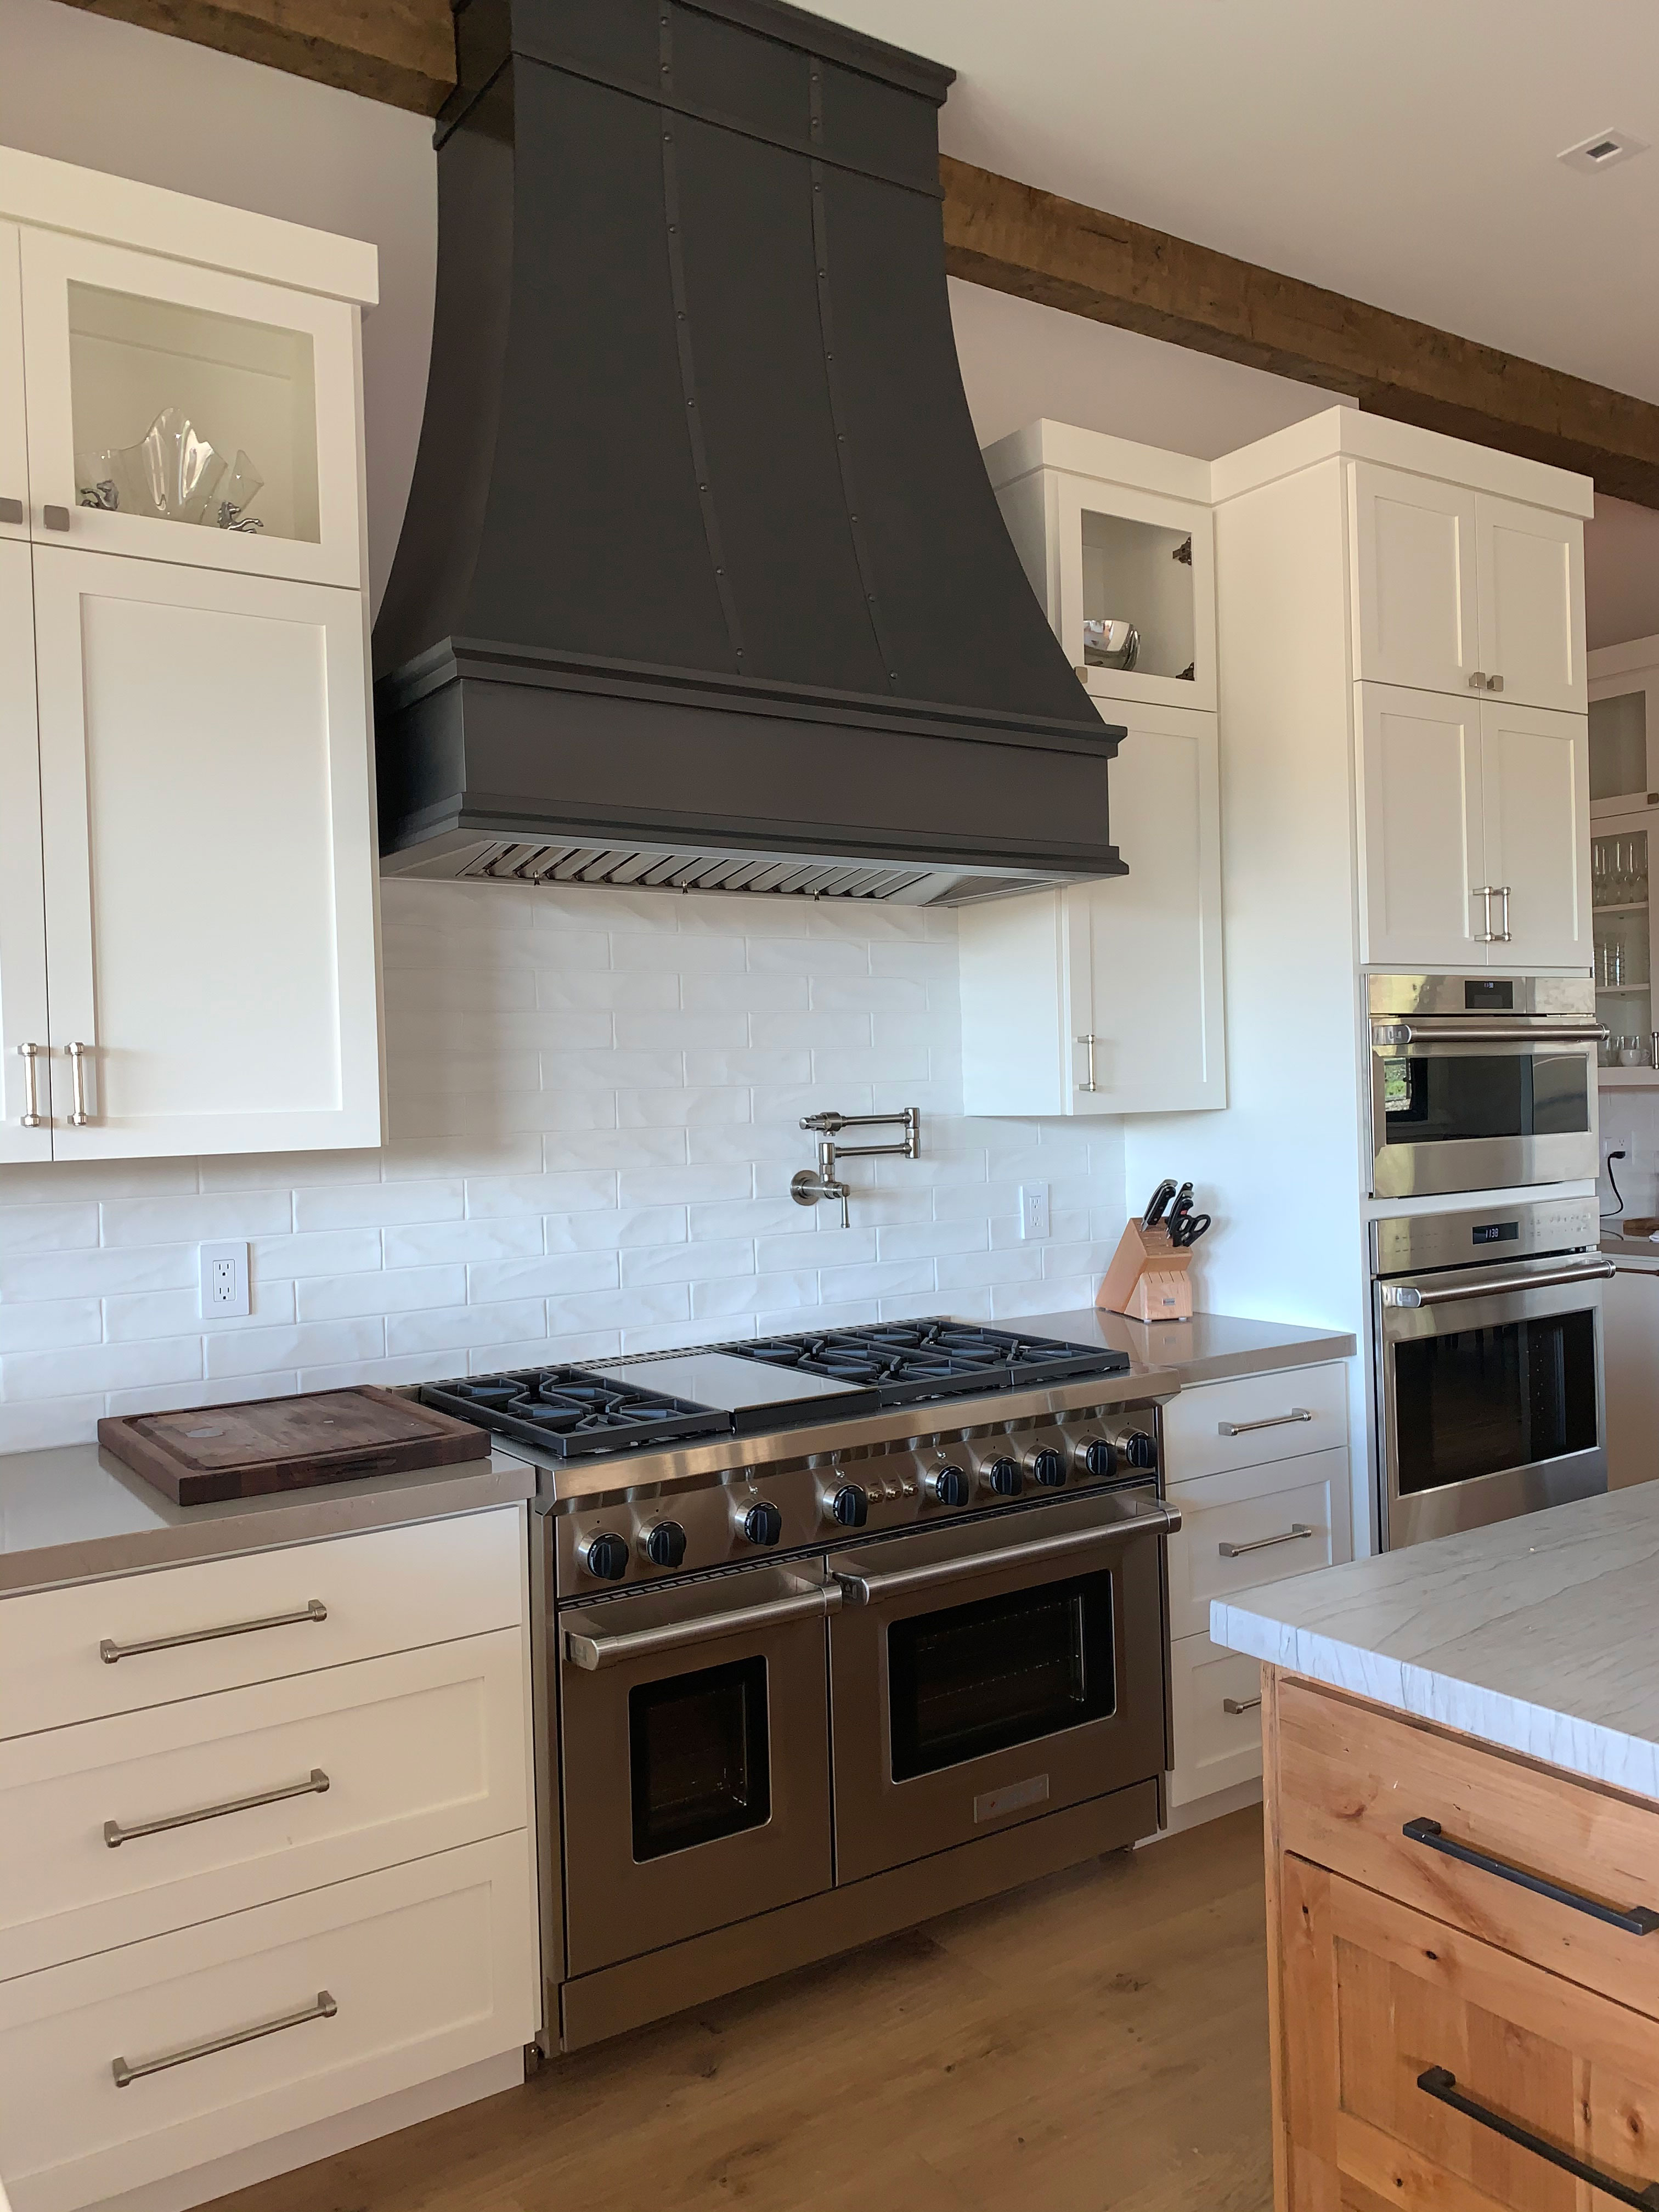 A harmonious and stylish kitchen design with stylish range hood, coastal kitchen project with white kitchen cabinets, marble kitchen countertops, stunning brick backsplash